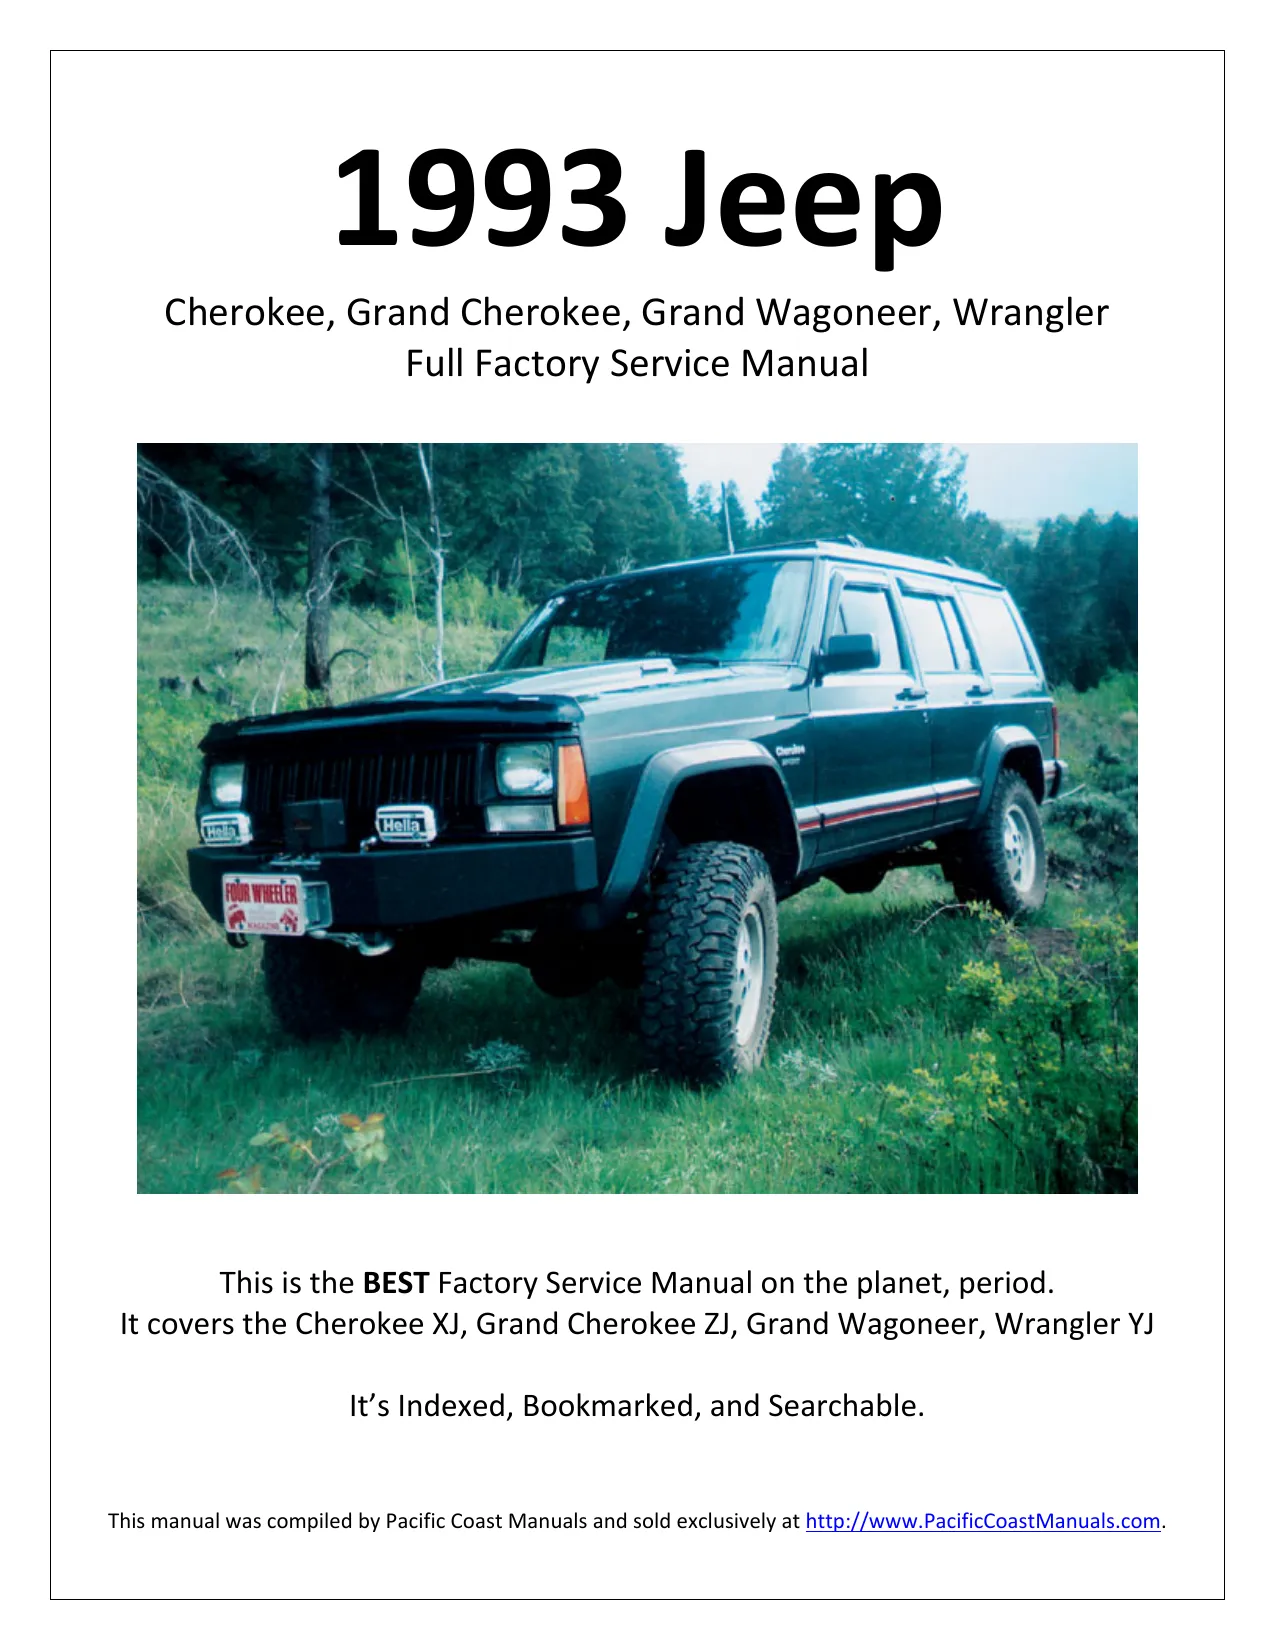 1993 Jeep Cherokee XJ shop manual